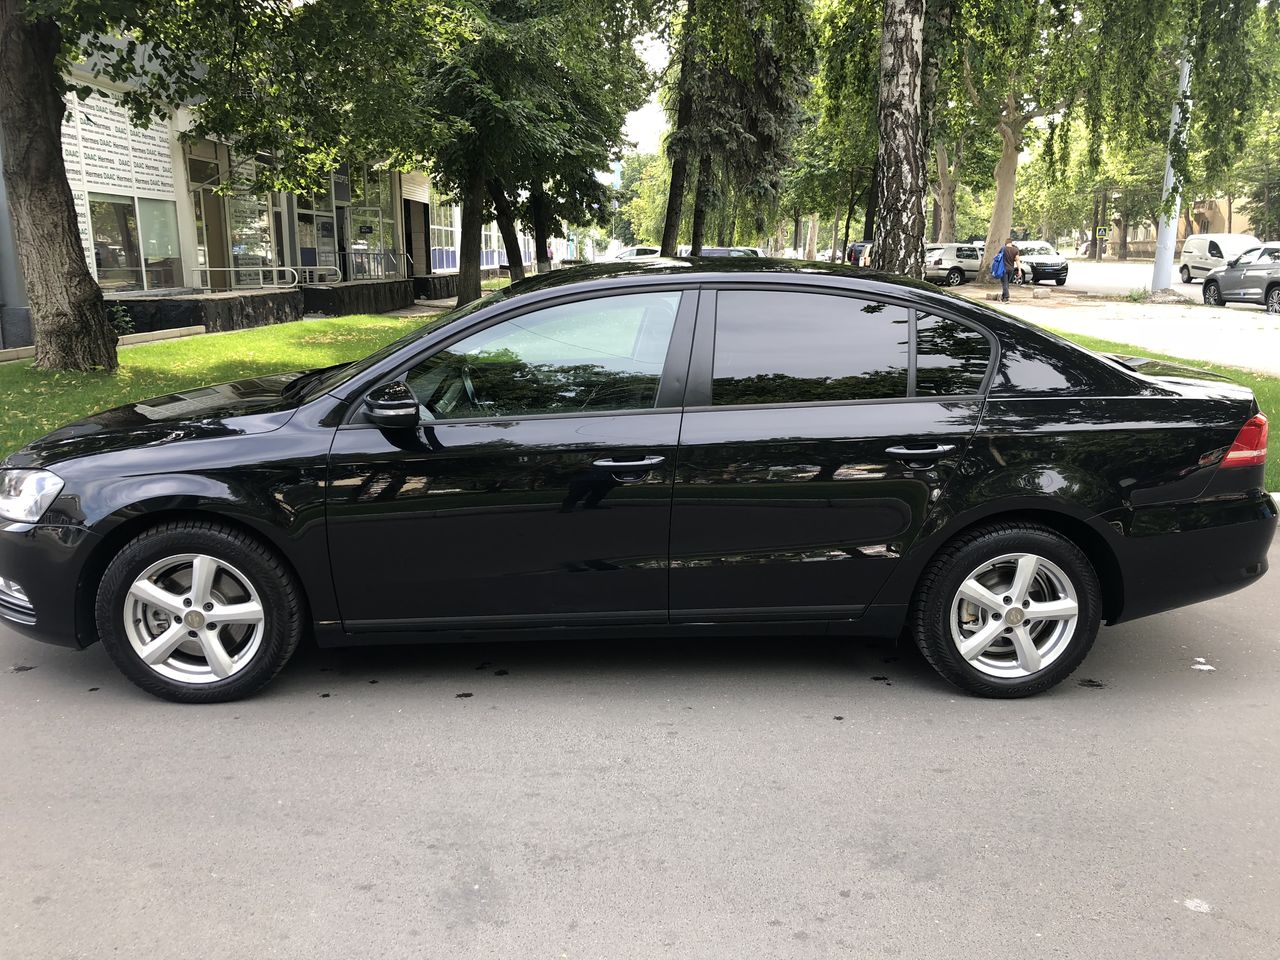 Volkswagen Passat B7 (4x4) - Car for Rent Chisinau, Moldova4